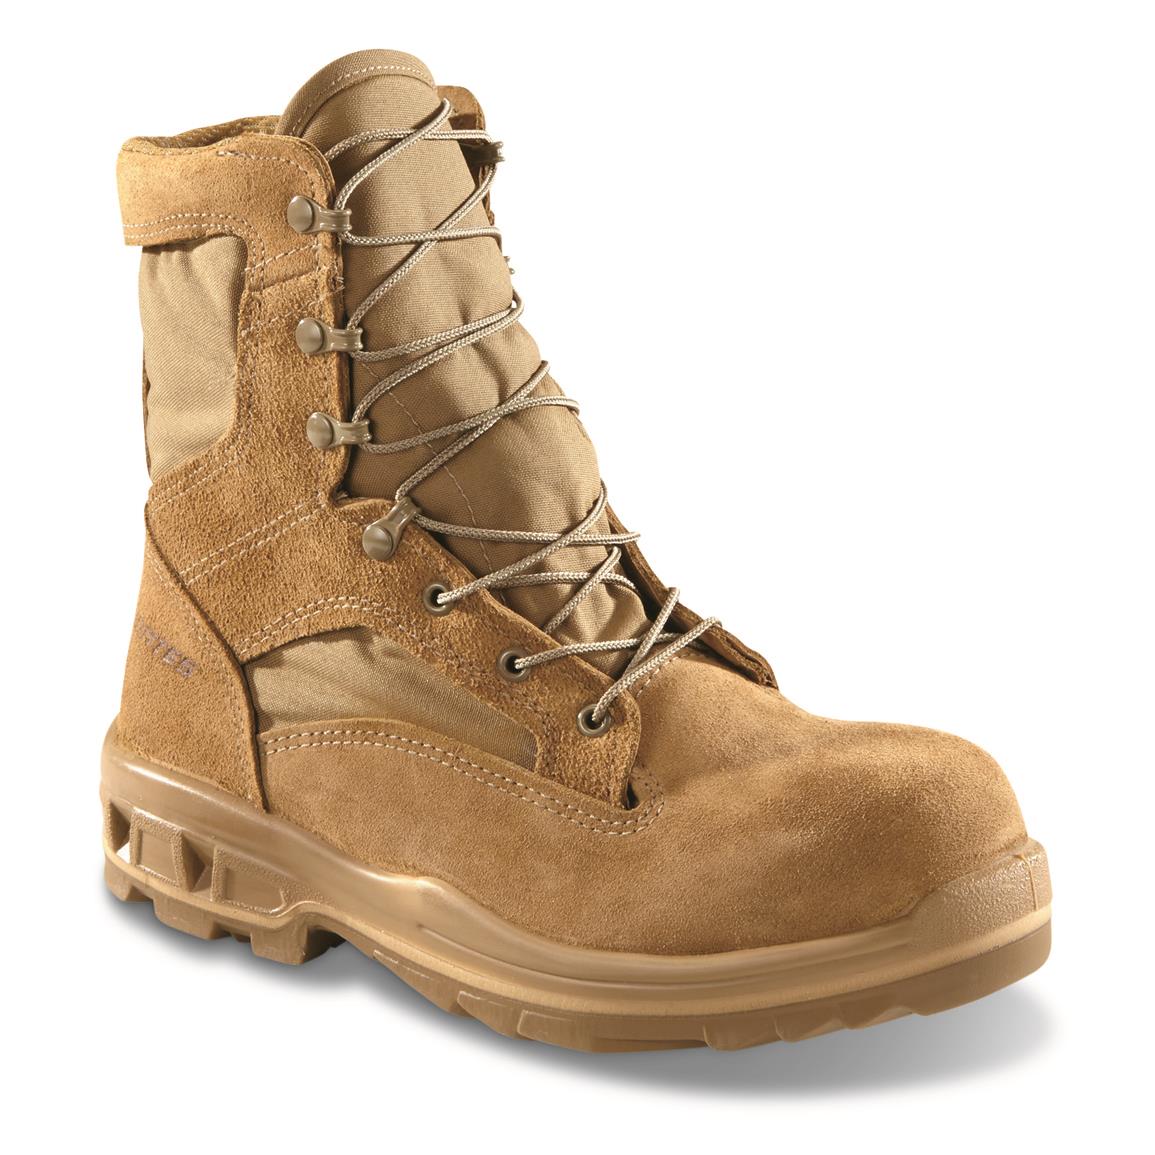 U.S. Military Surplus Bates Hot Weather TerraX3 Composite Toe Boots, New, Coyote